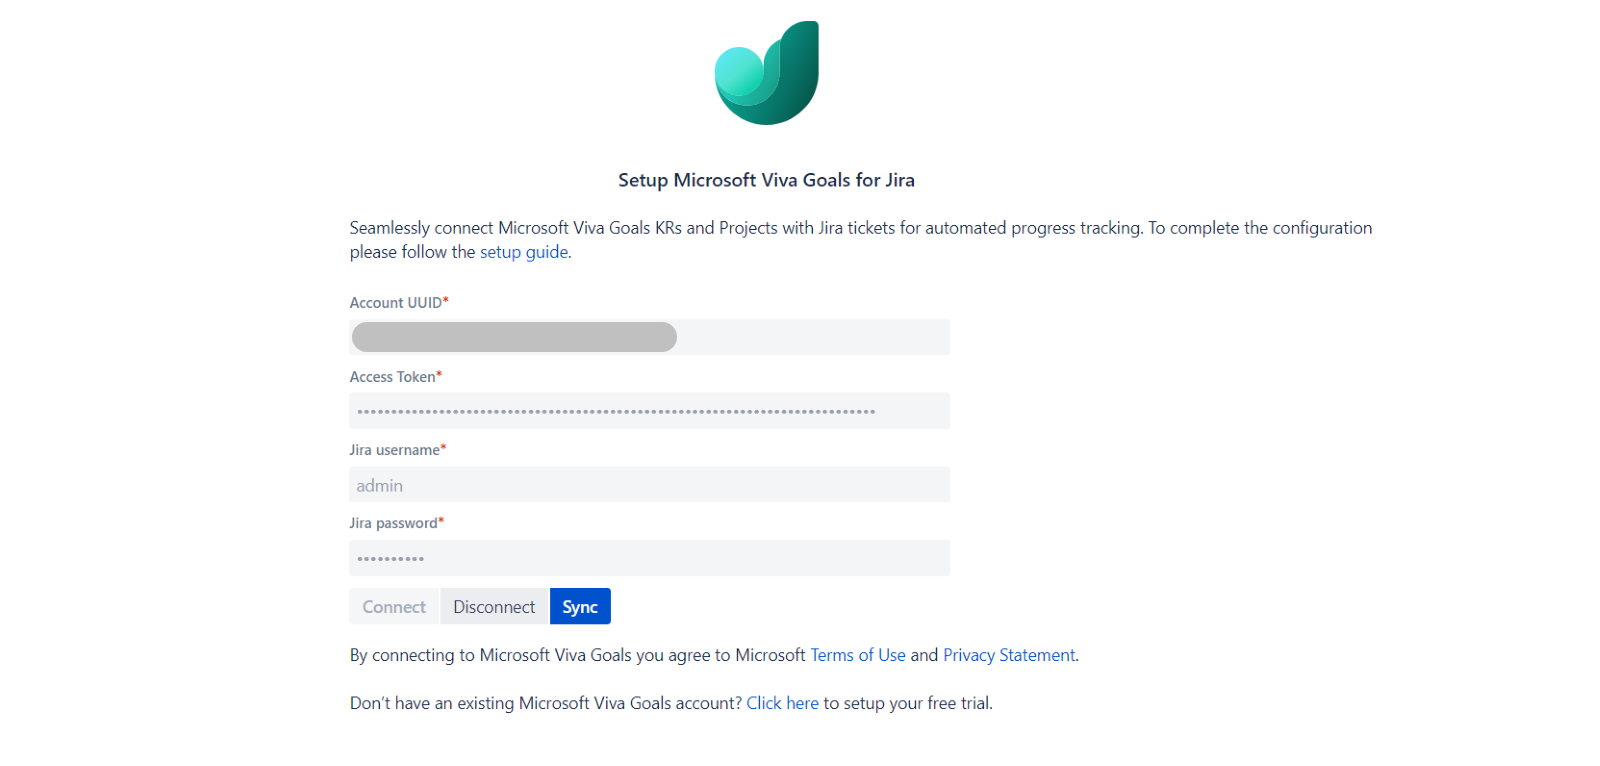 Screenshot showing the Setup Microsoft Viva Goals for Jira page.